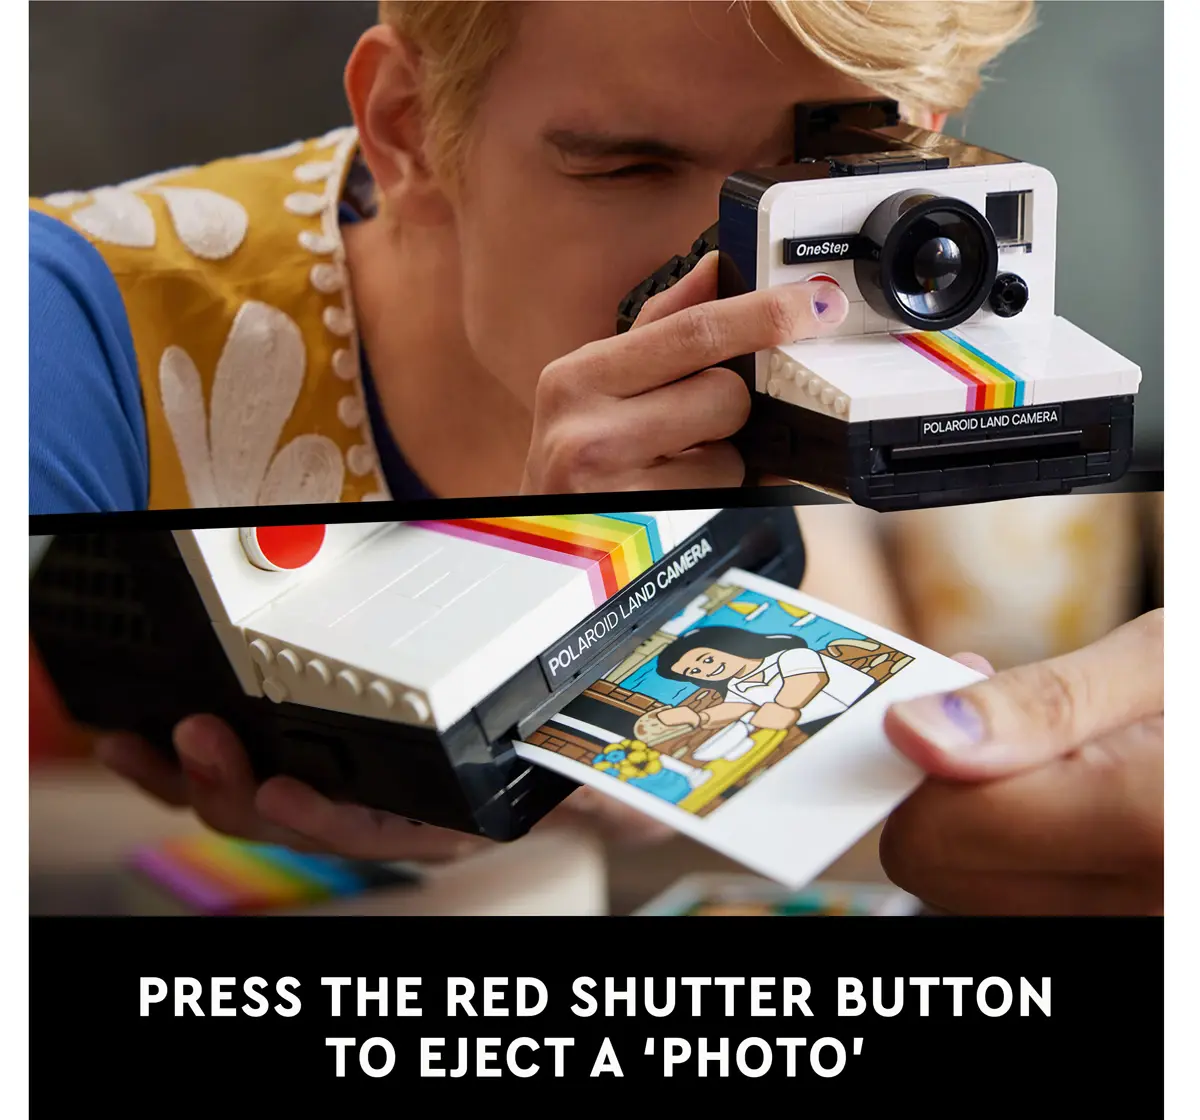 LEGO Ideas Polaroid OneStep SX-70 Camera Set 21345 (516 Pieces)